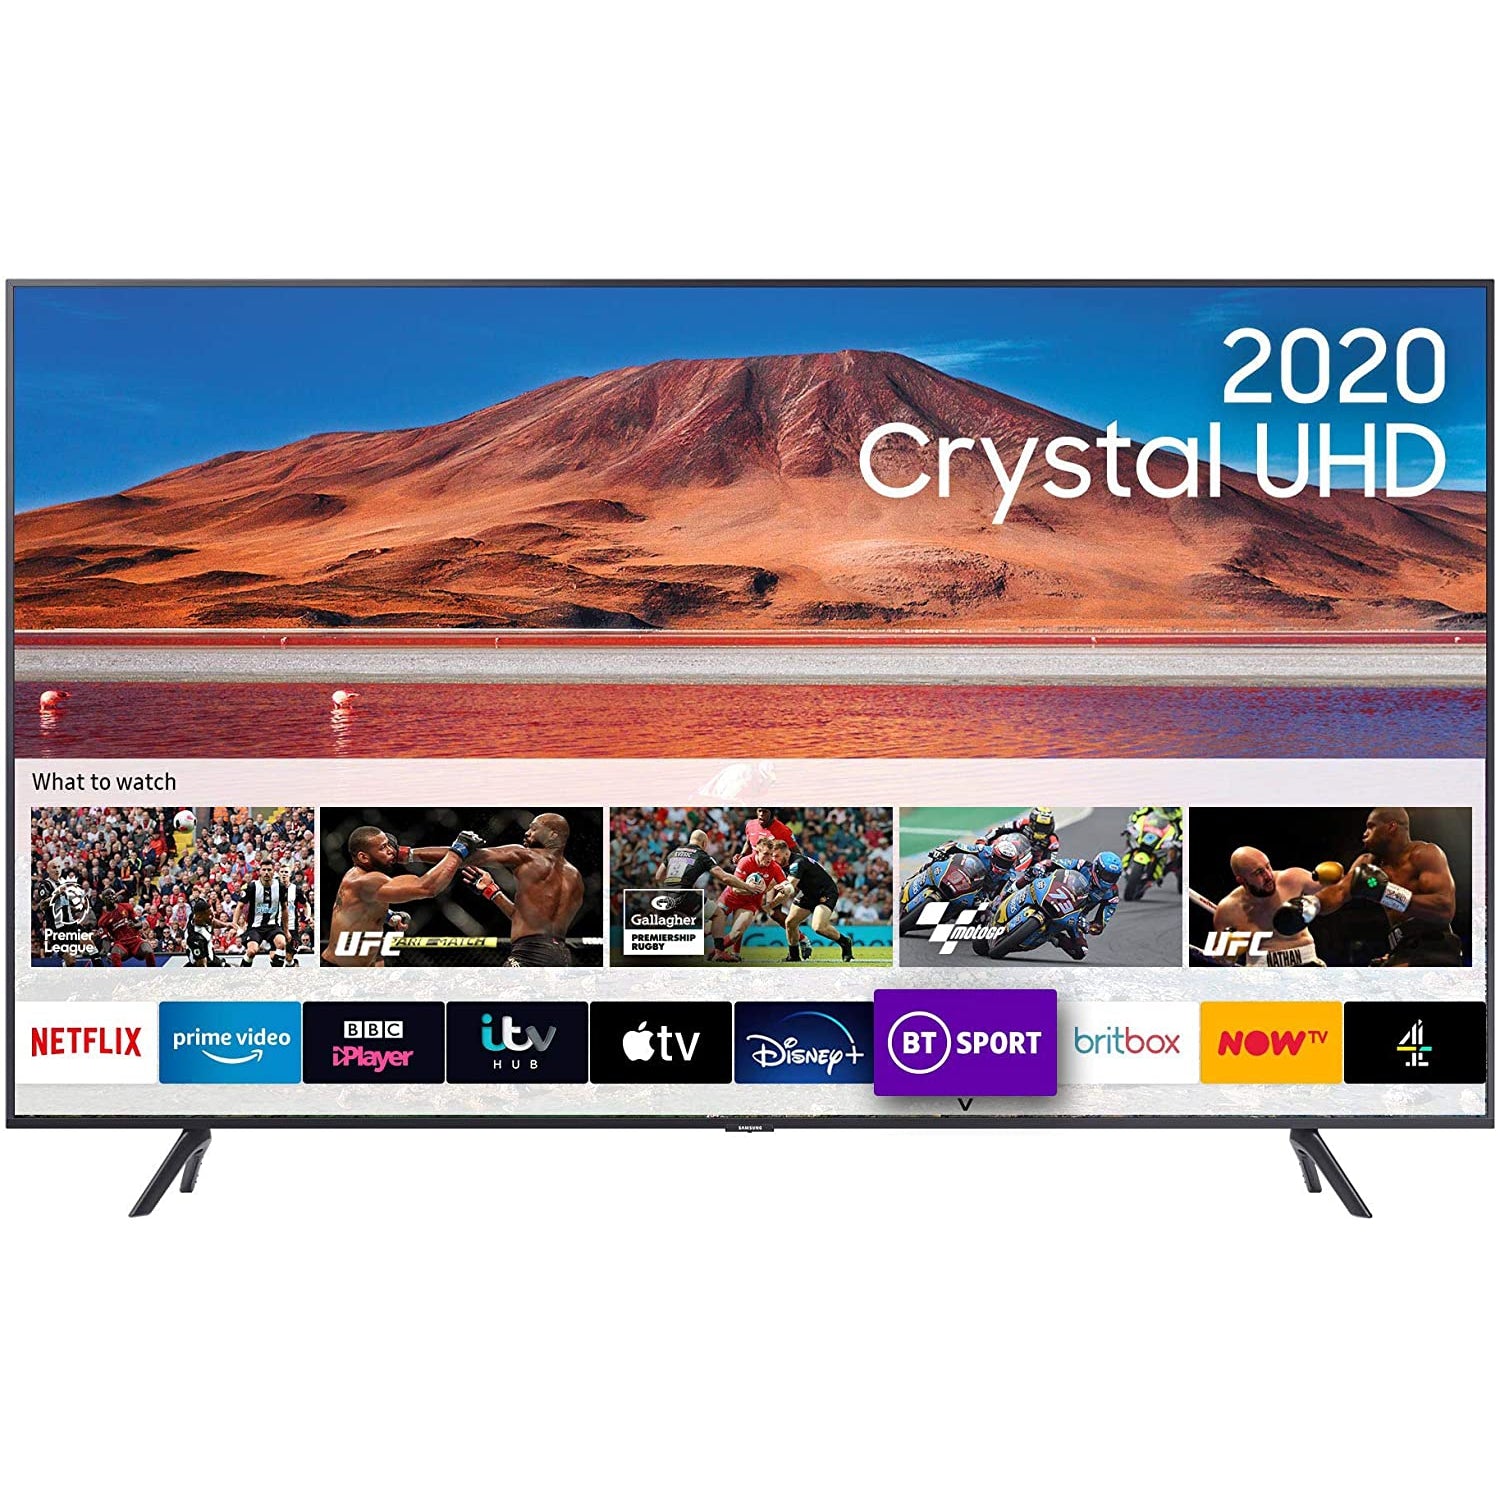 70" TU7100 Crystal UHD 4K HDR Smart TV